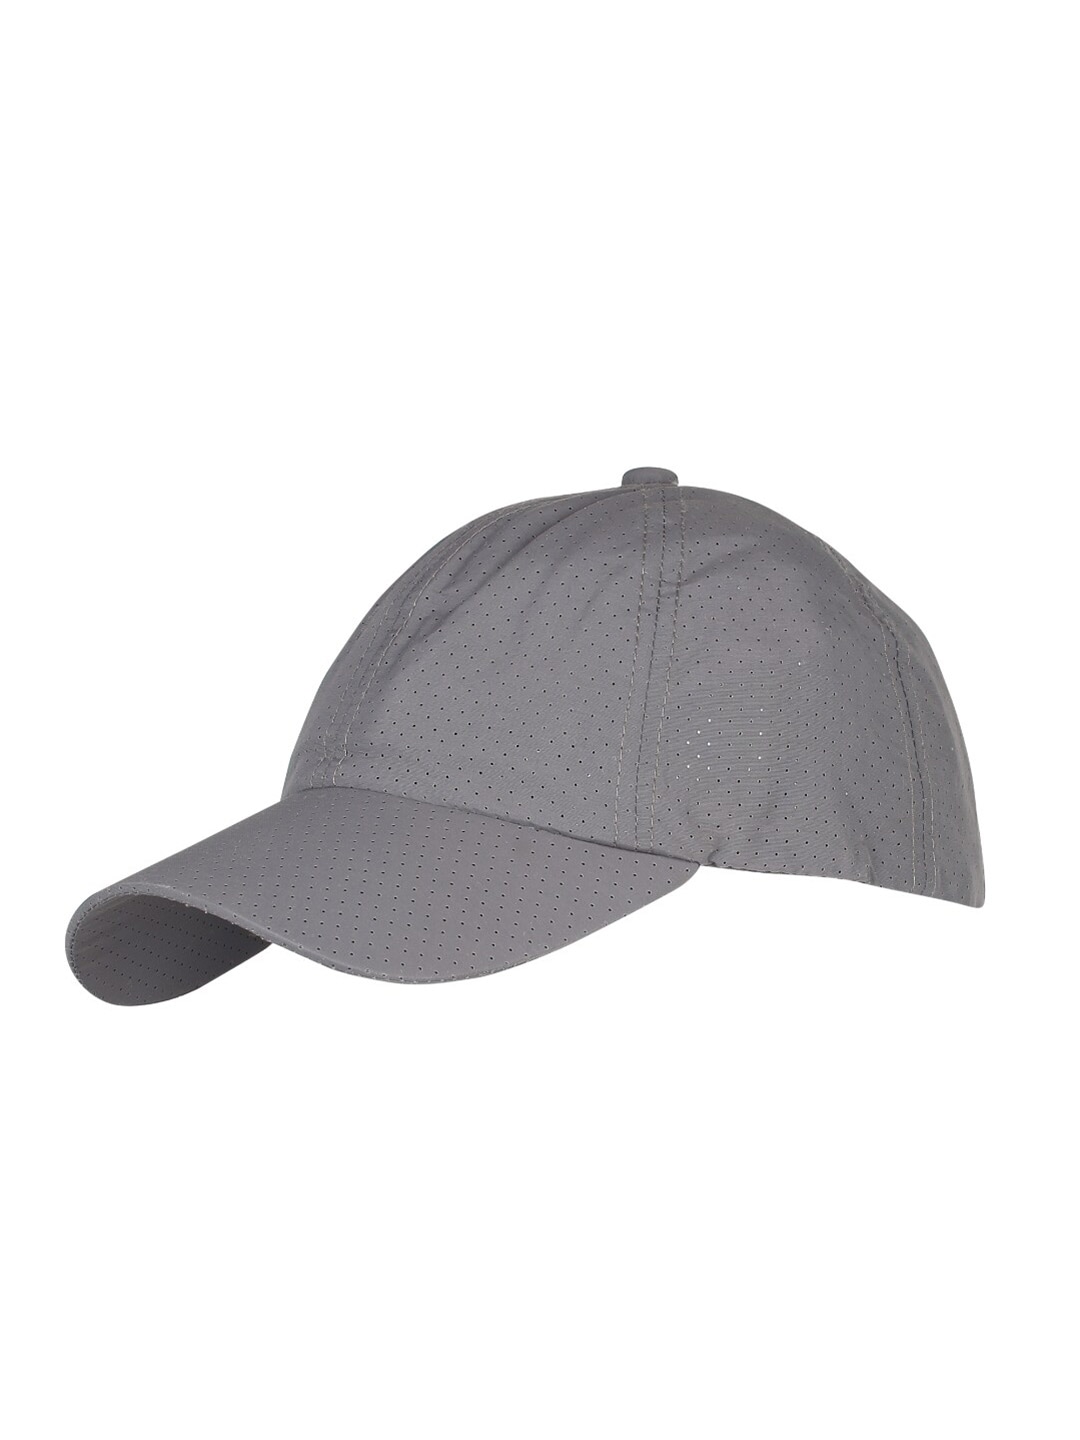 Accessories Caps | iSWEVEN Unisex Grey Snapback Cap - RP66539